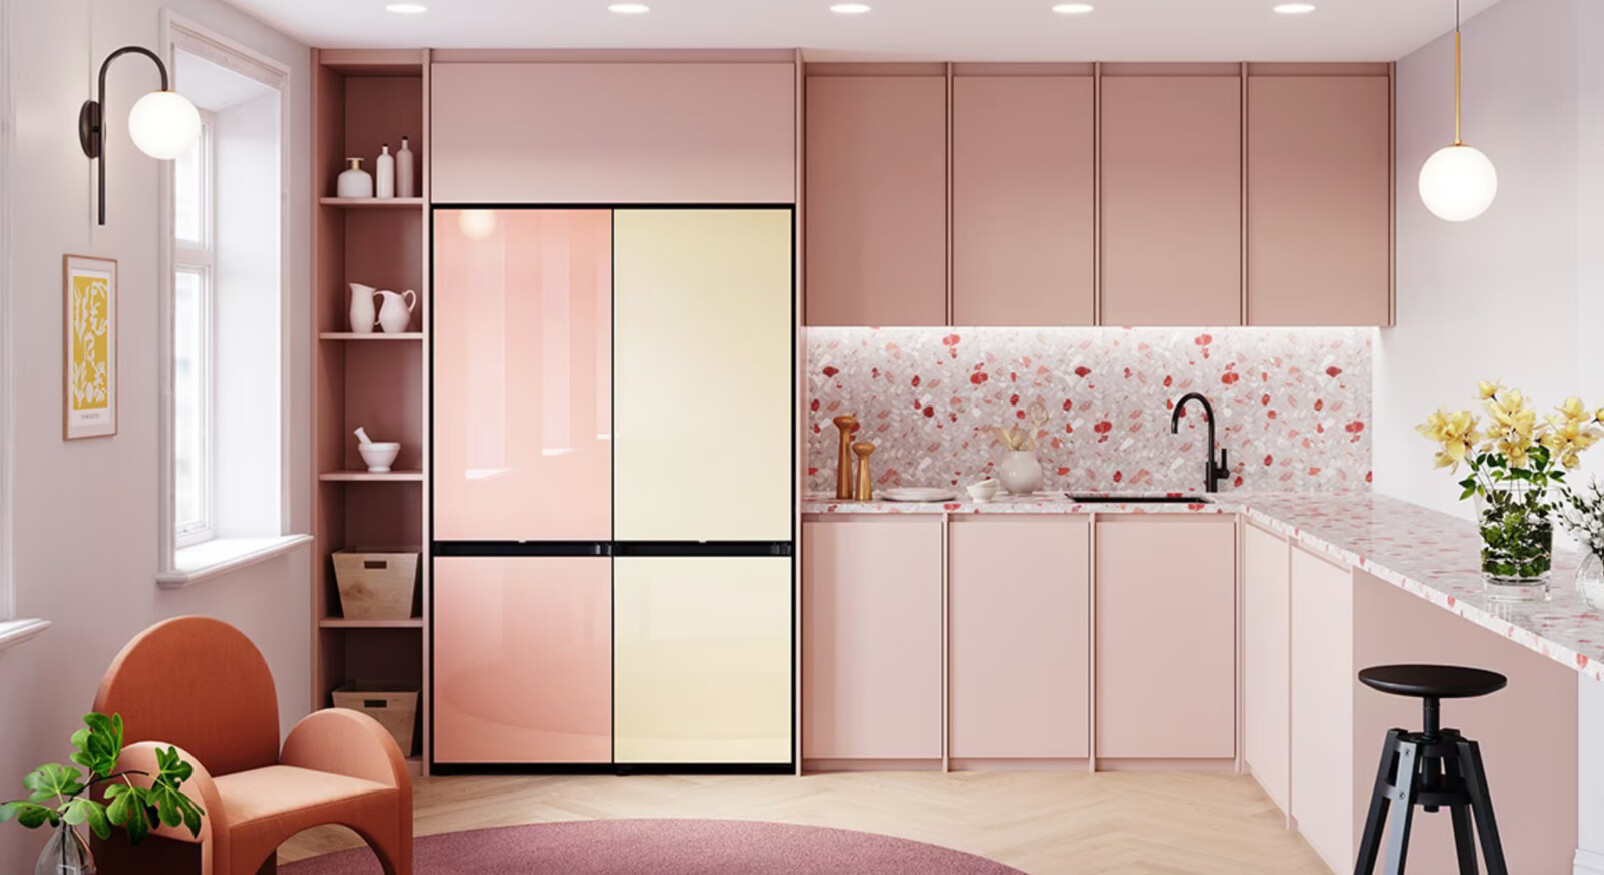 Samsung bespoke koelkasten roze keuken